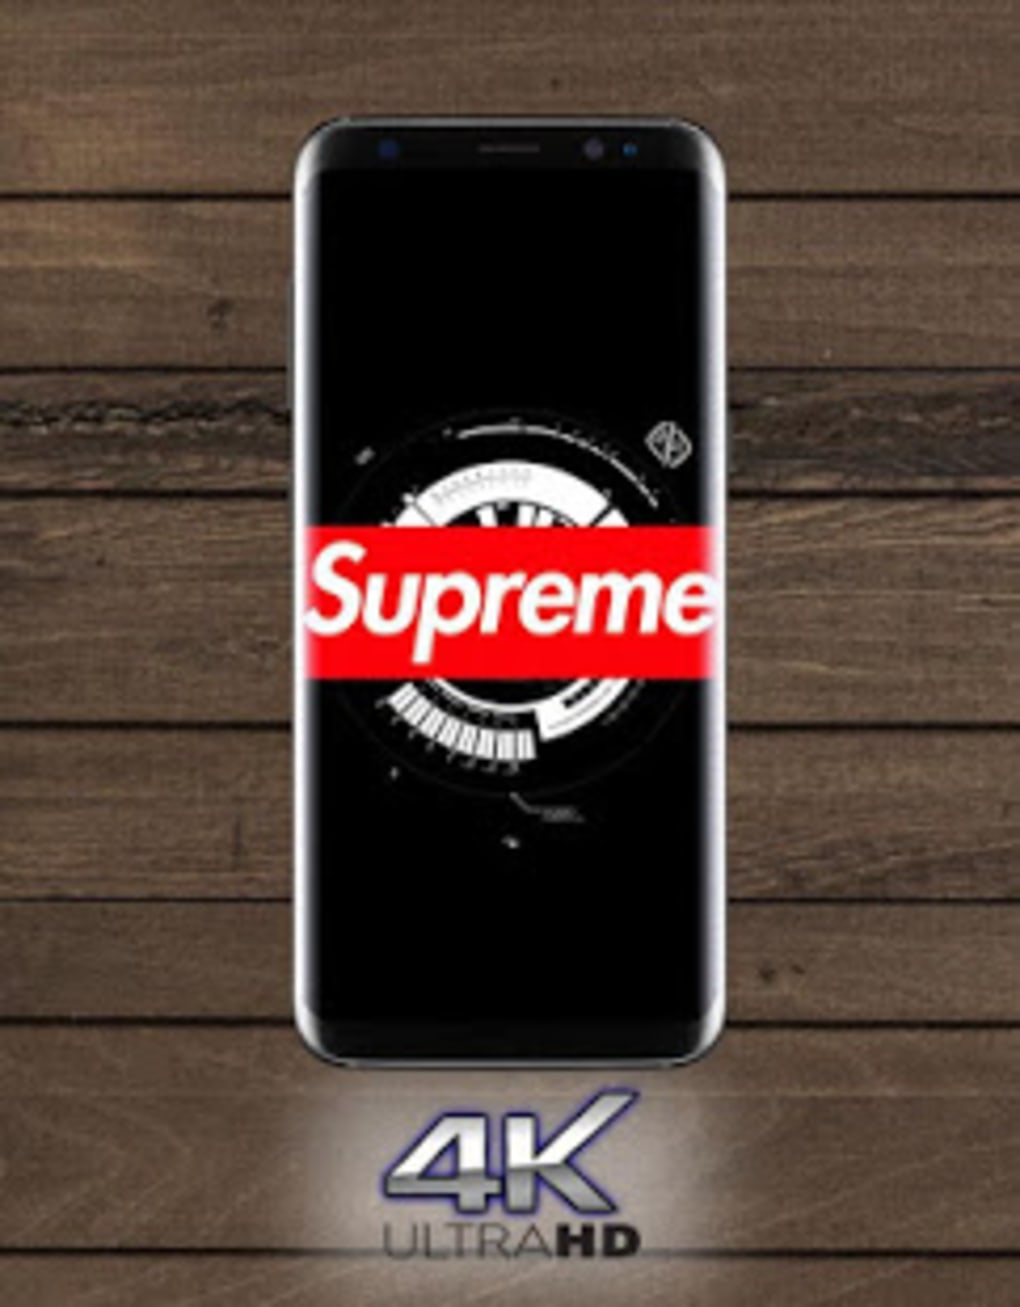 4k wallpaper | Supreme iphone wallpaper, Supreme wallpaper, Supreme  wallpaper hd